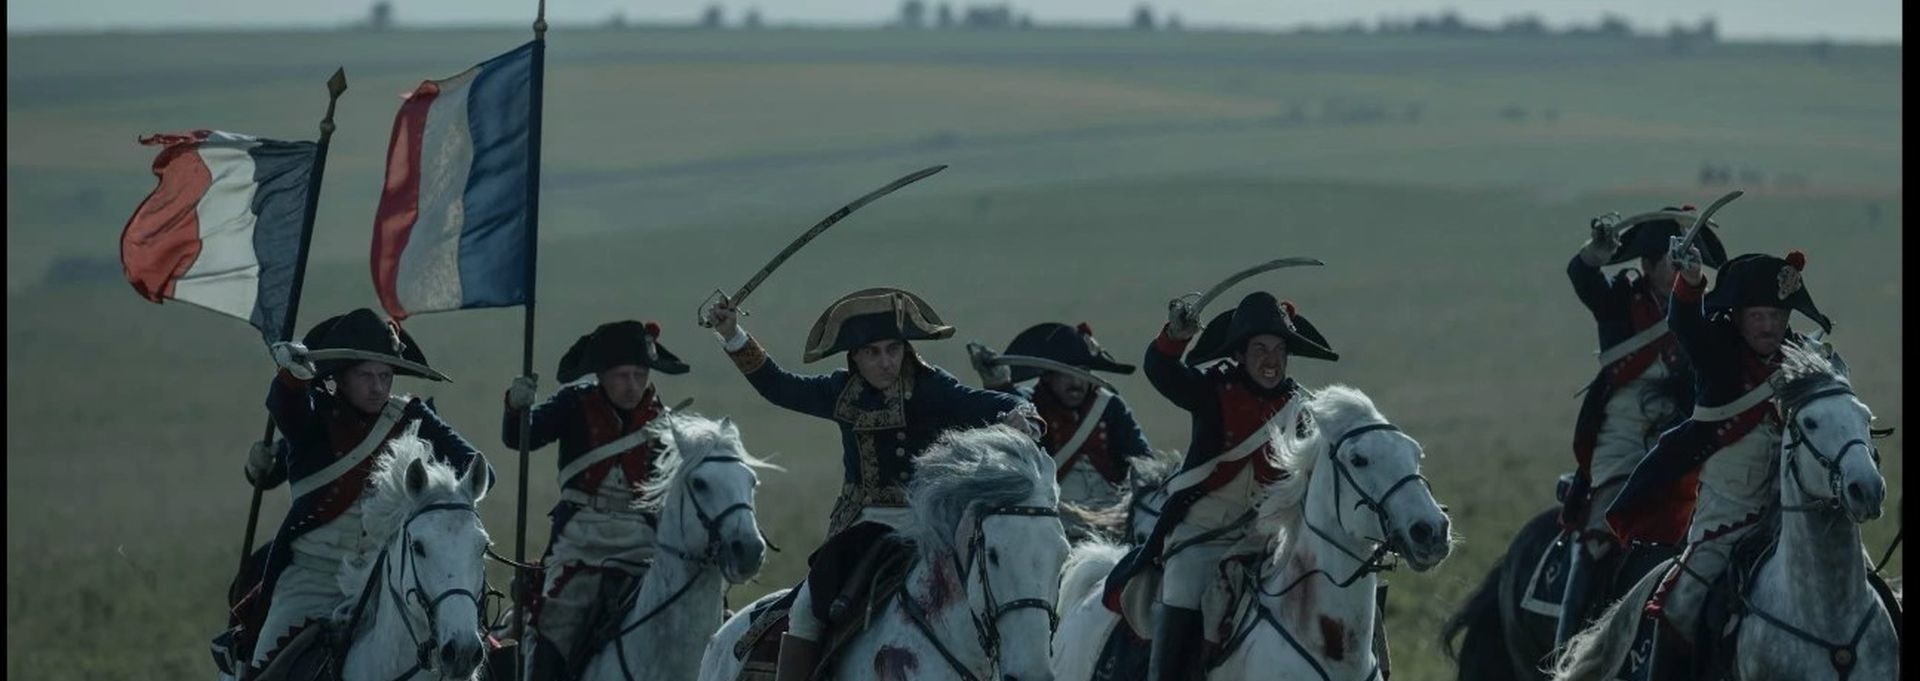 Joaquin Phoenix als Napoleon in Ridley Scotts Epos